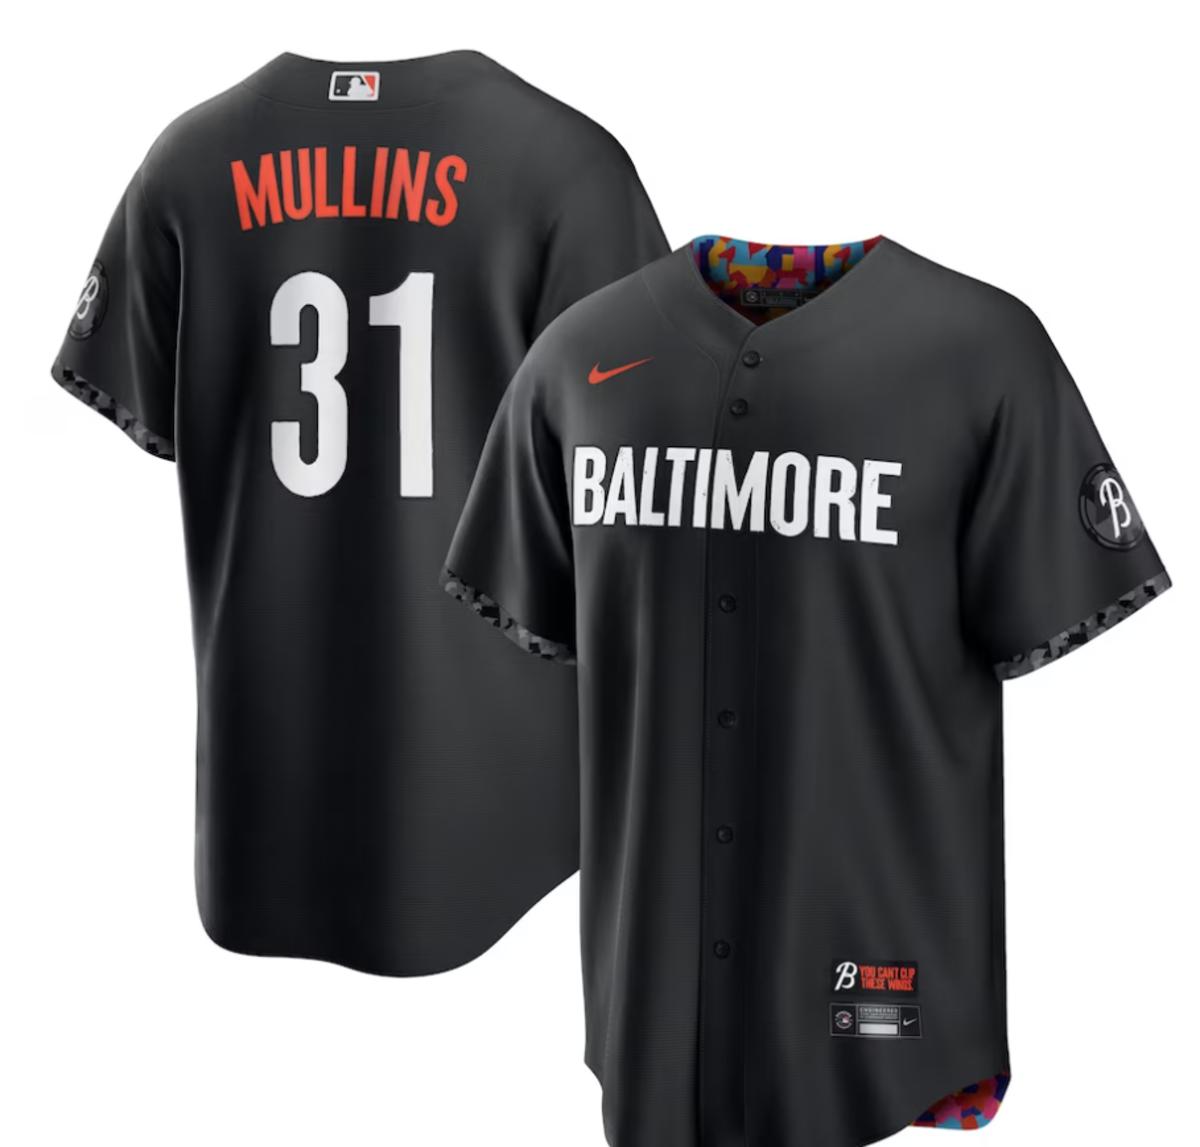 Baltimore Orioles Apparel & Gear.